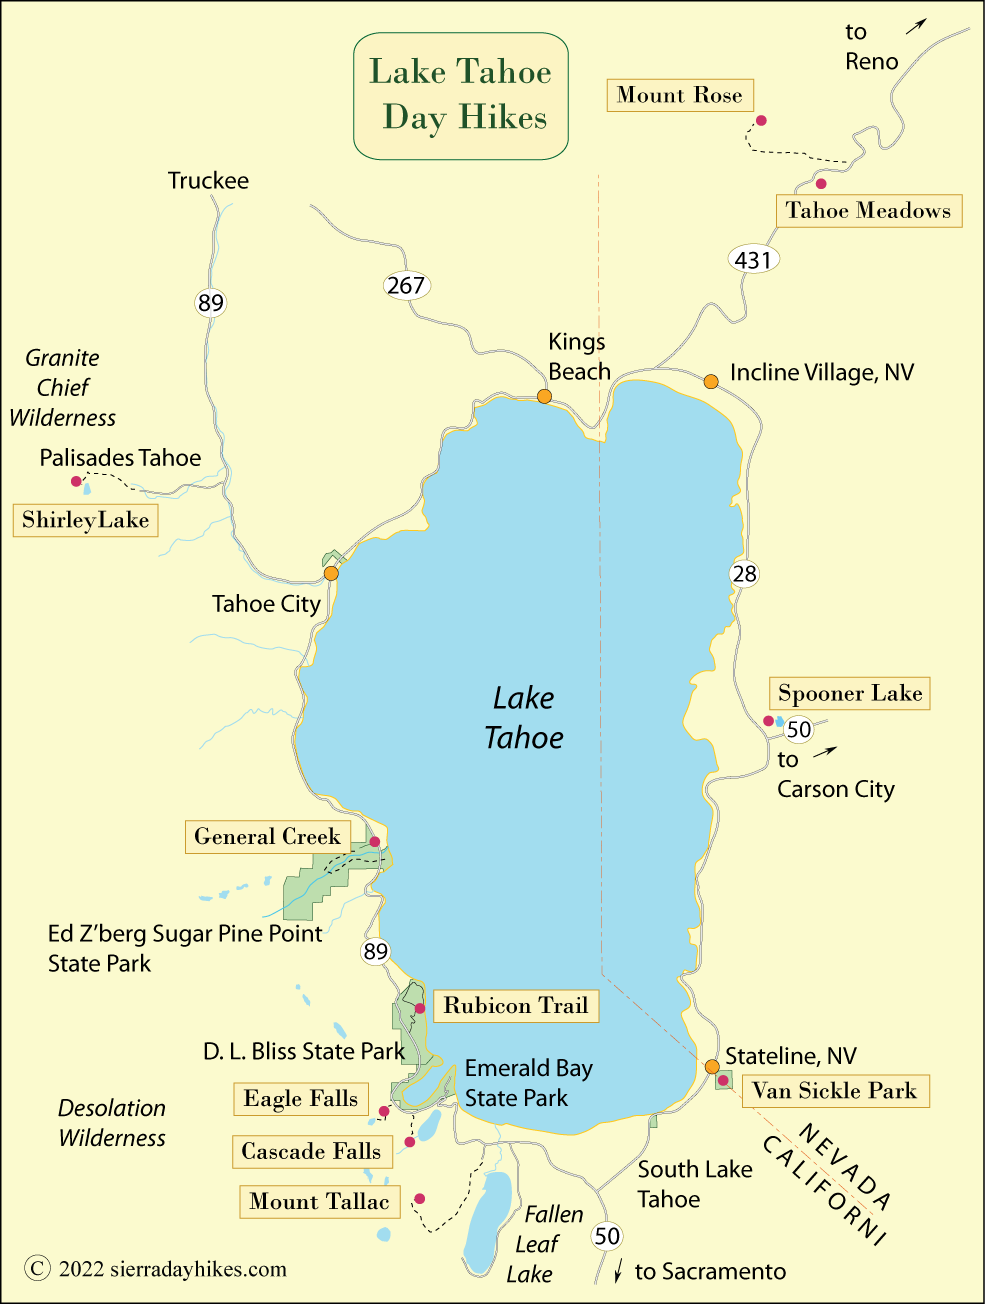 Lake Tahoe day hikes map, California and Nevada